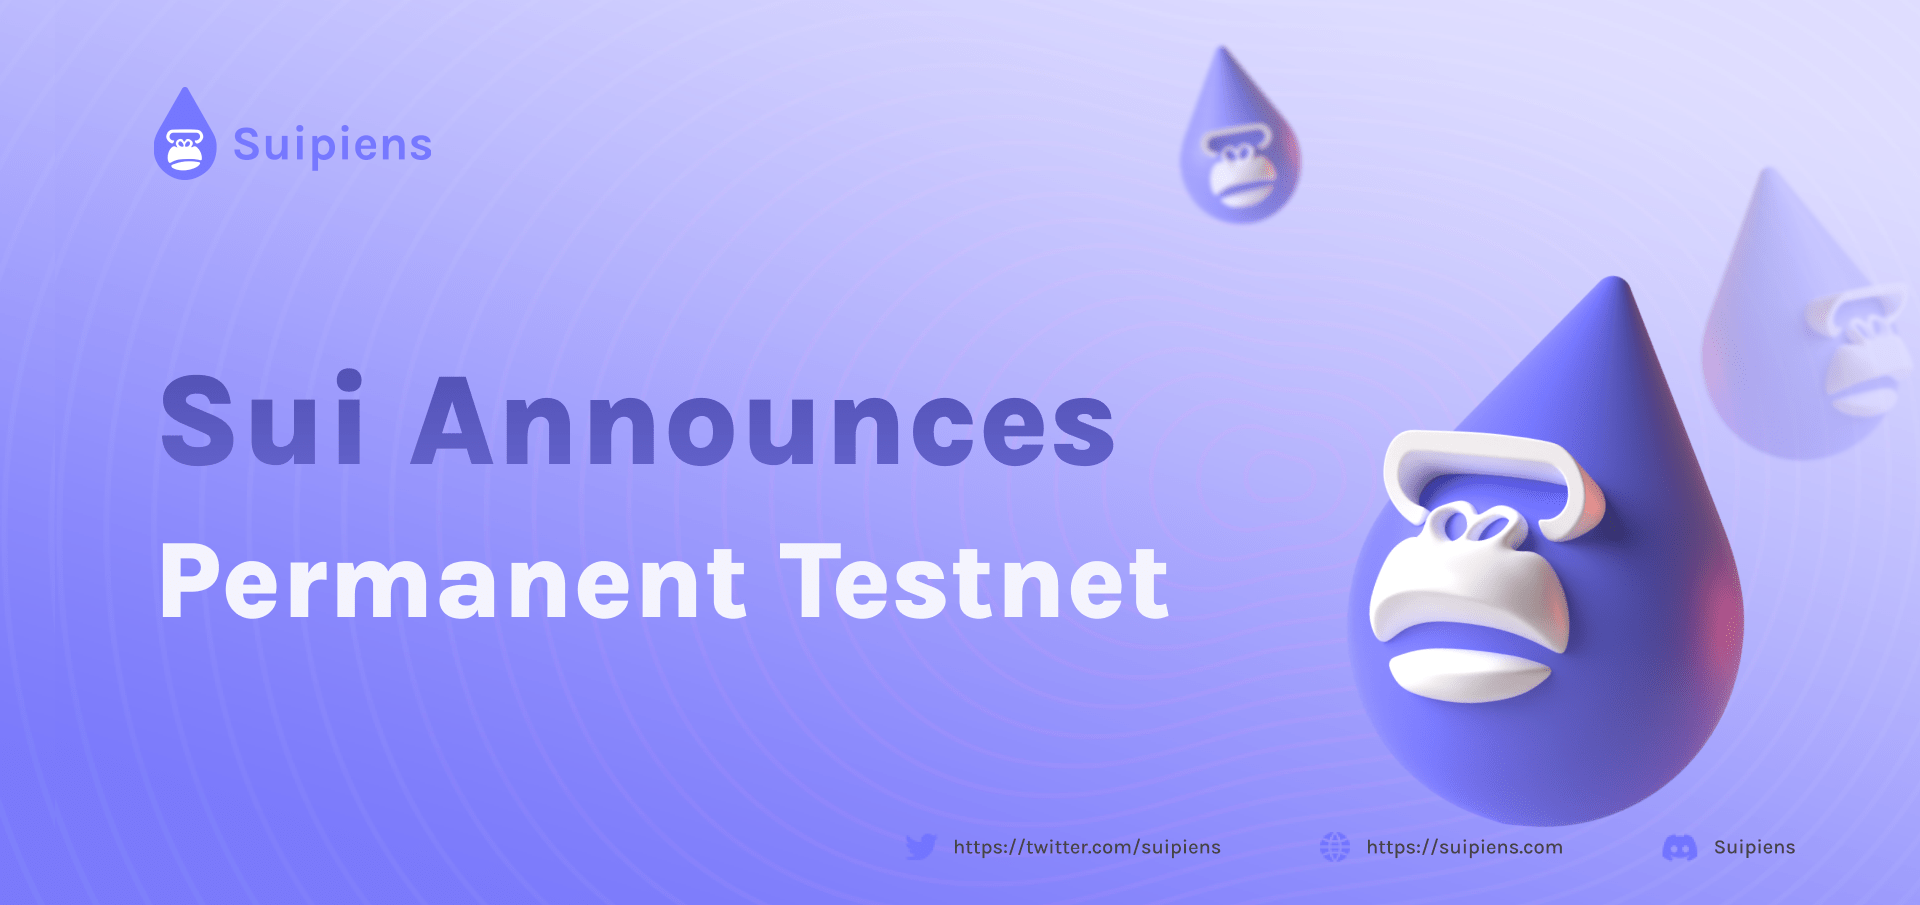 Sui Announced Permanent Testnet